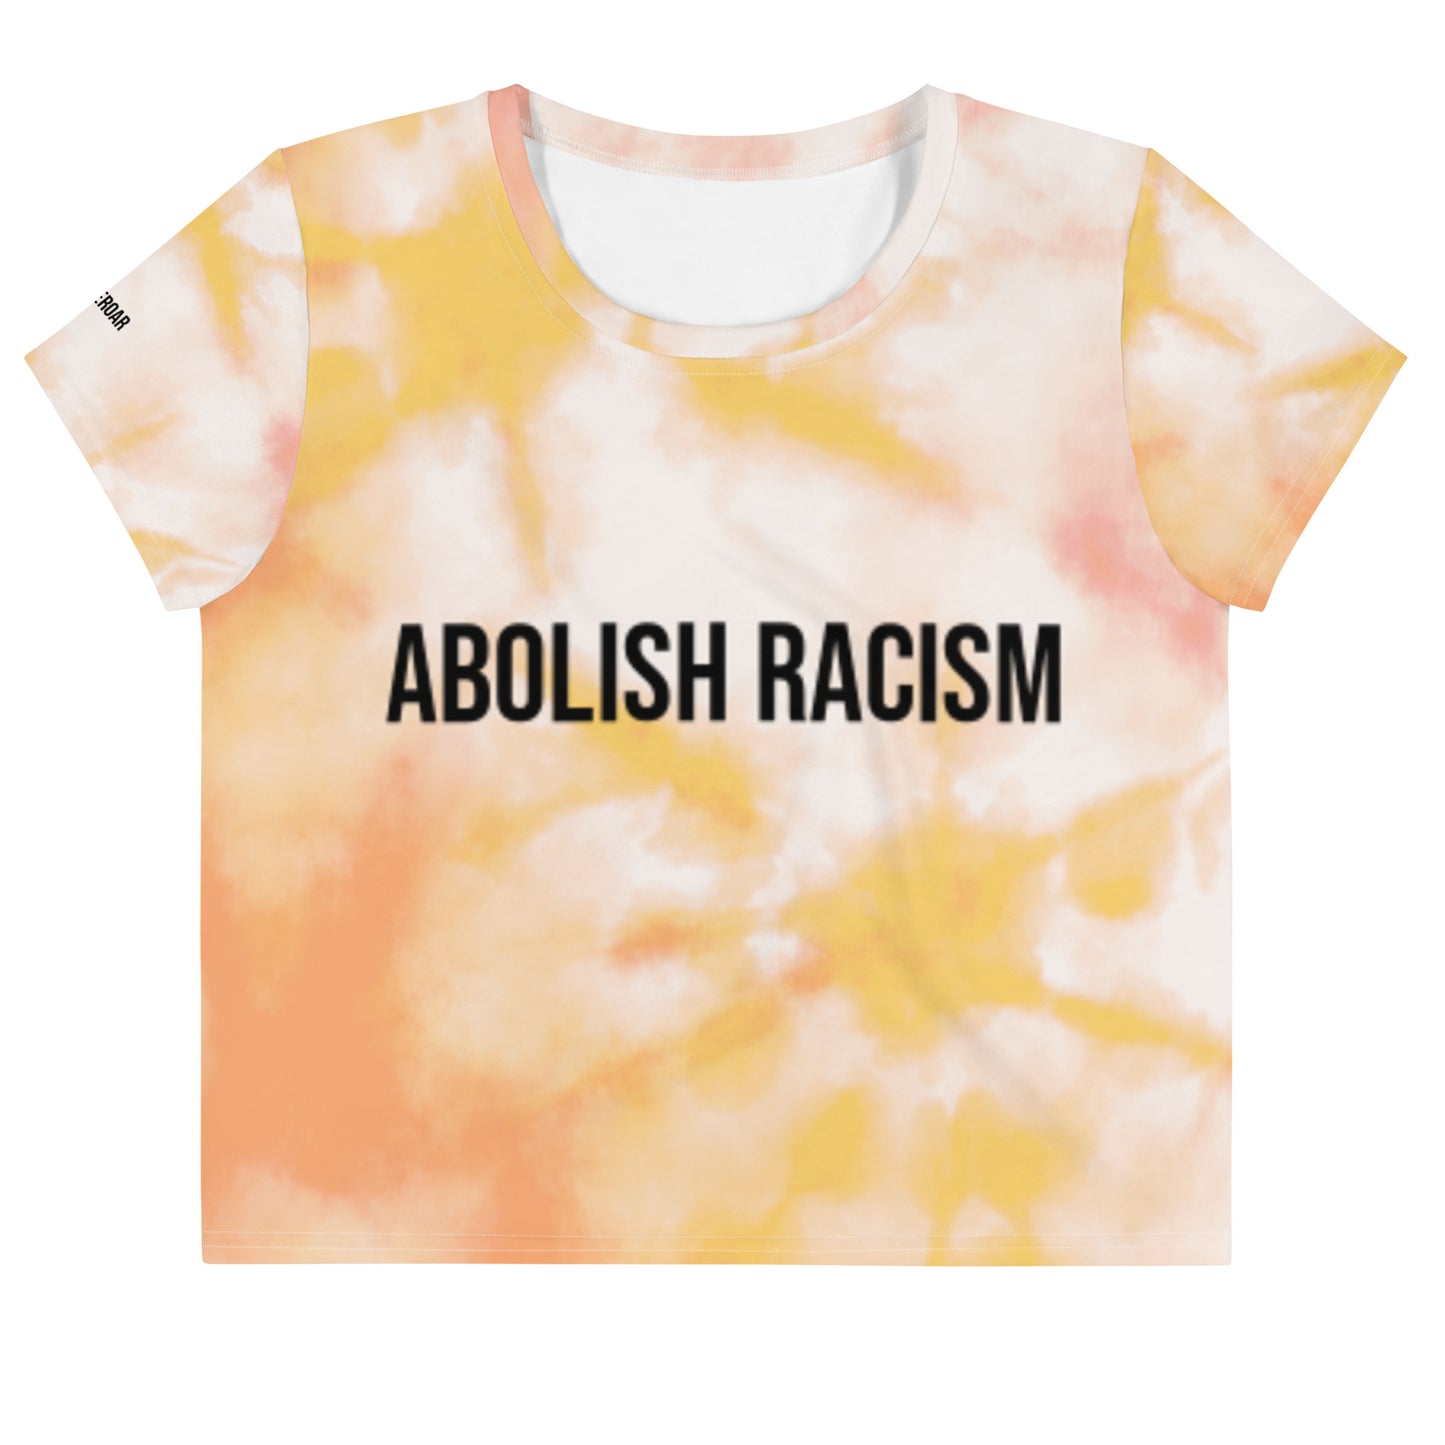 Abolish Racism Crop Top